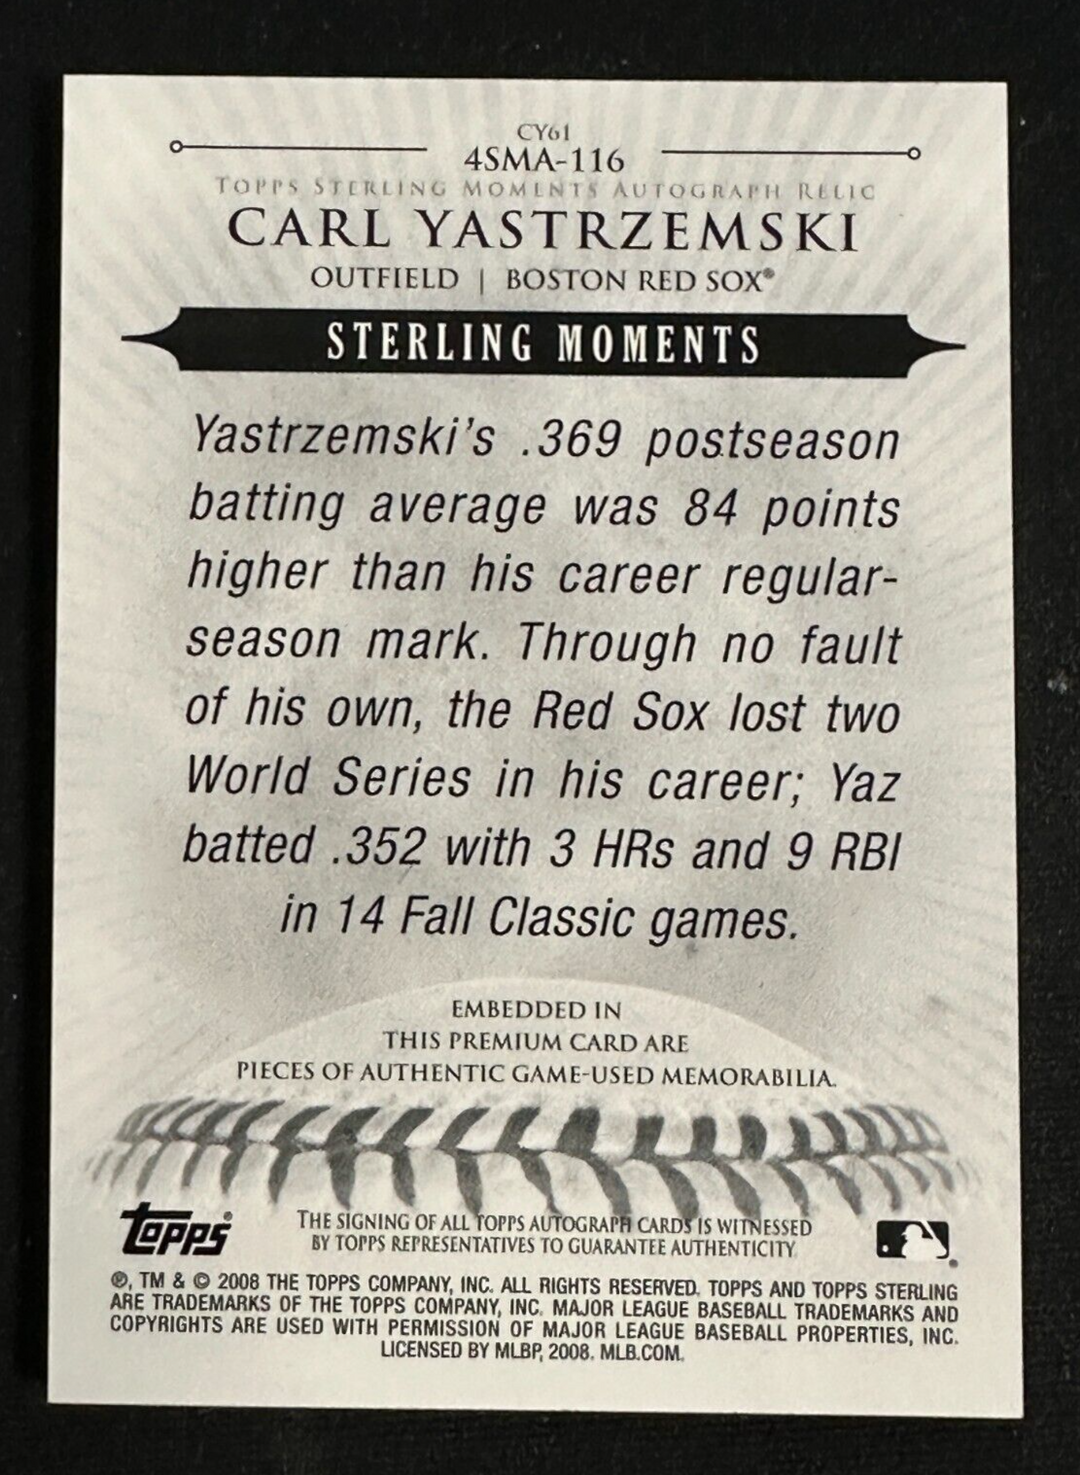 2008 Topps Sterling Carl Yastrzemski Autographed Quad Bat & Jersey Card 6/10